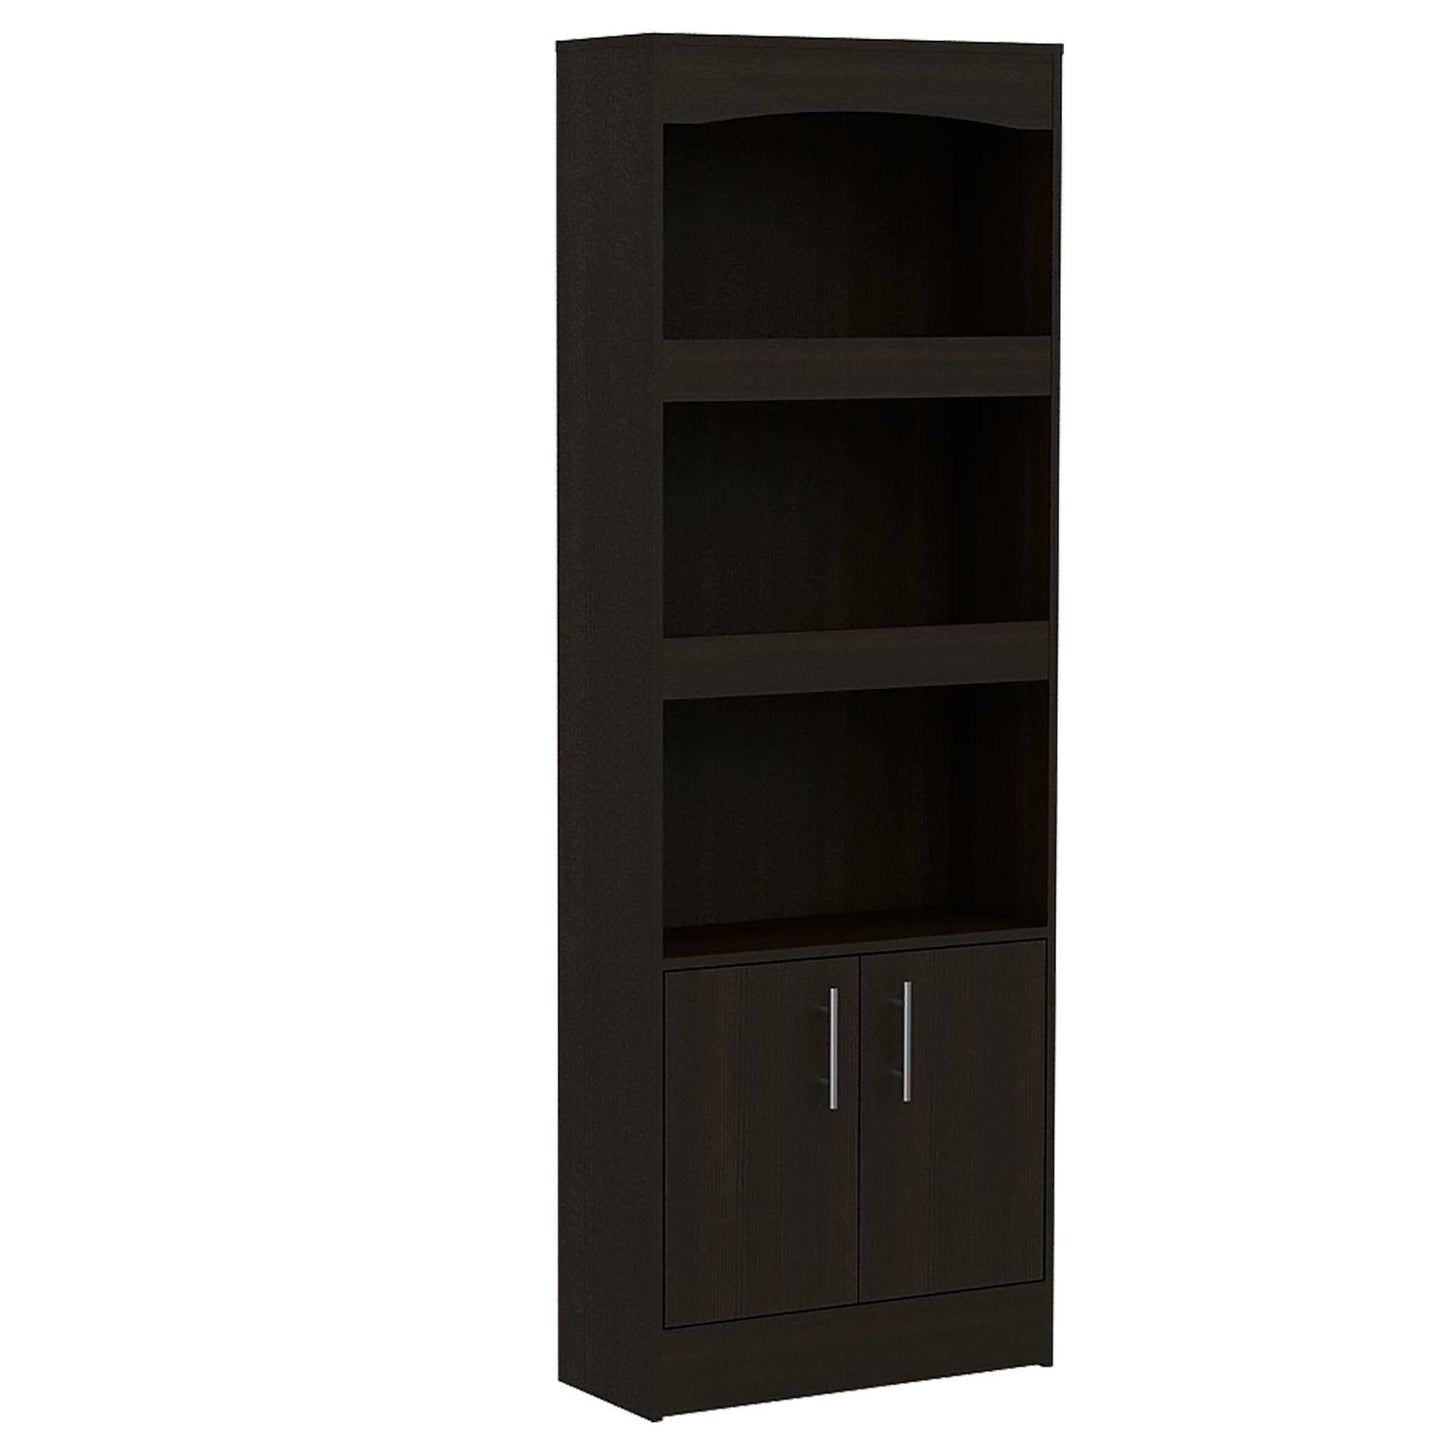 71" Black Three Shelf Bookcase with Cabinet Storage